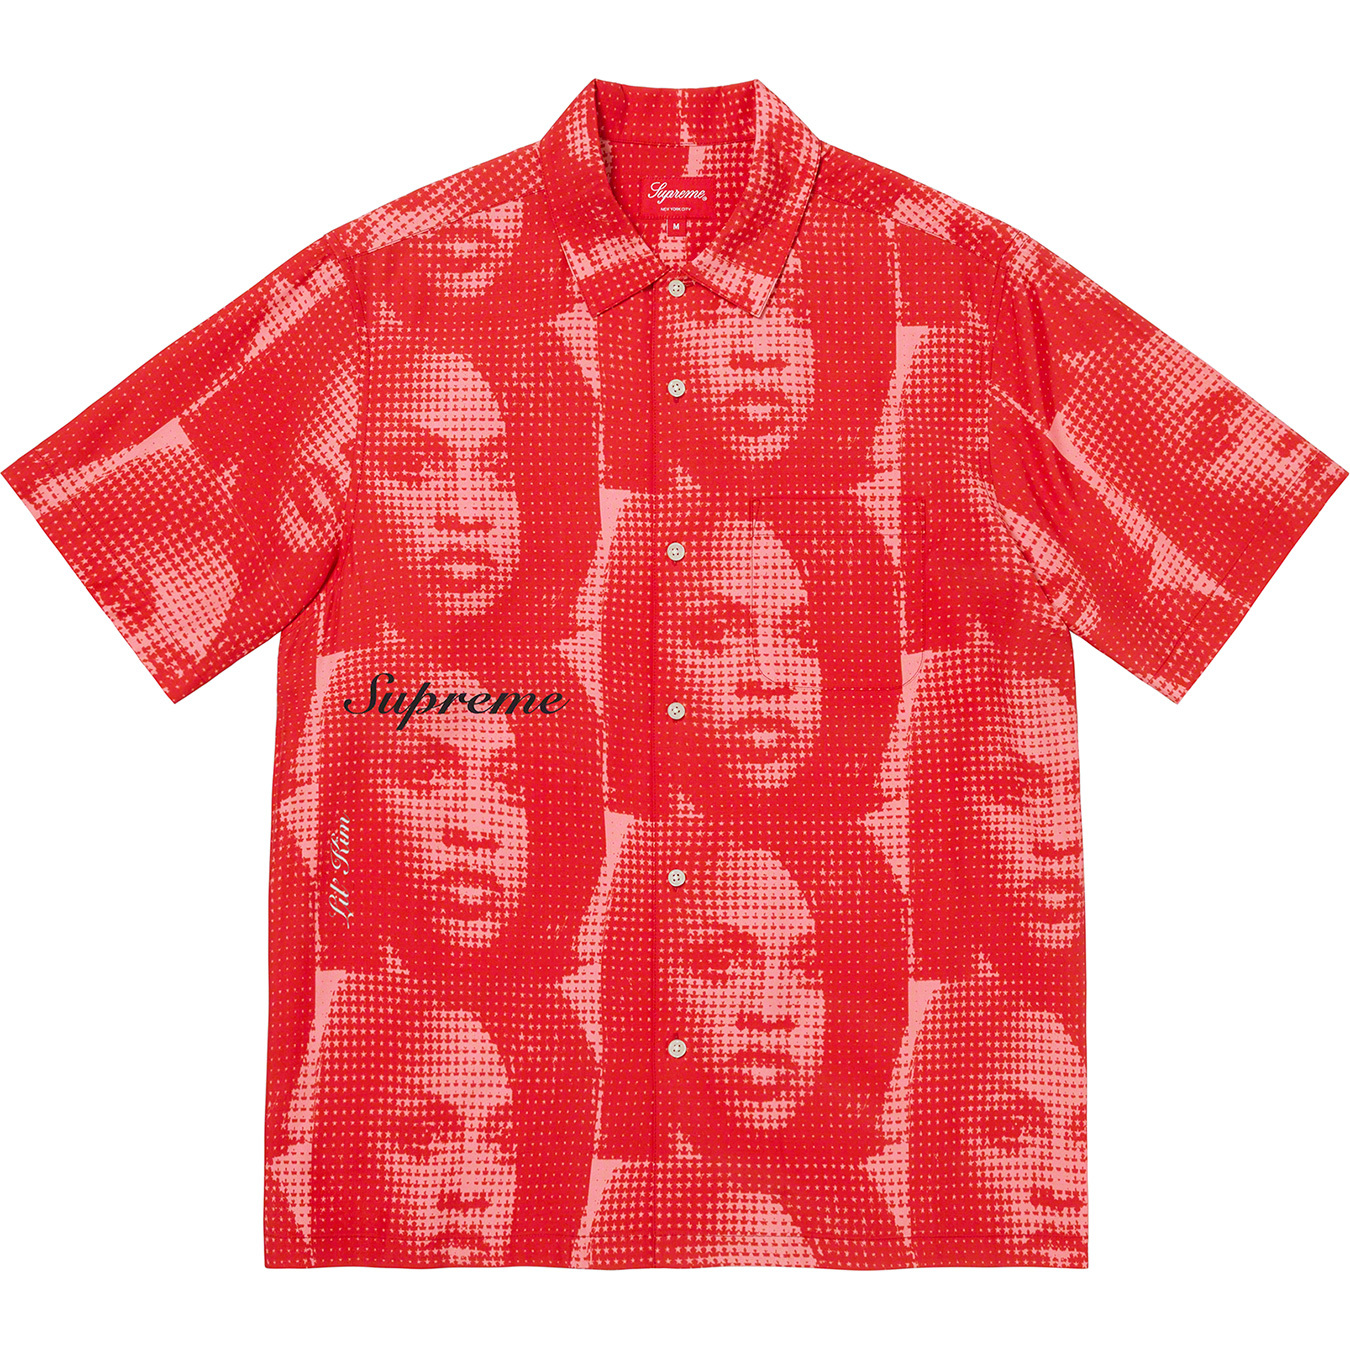 Lil Kim S/S Shirt | Supreme 22ss